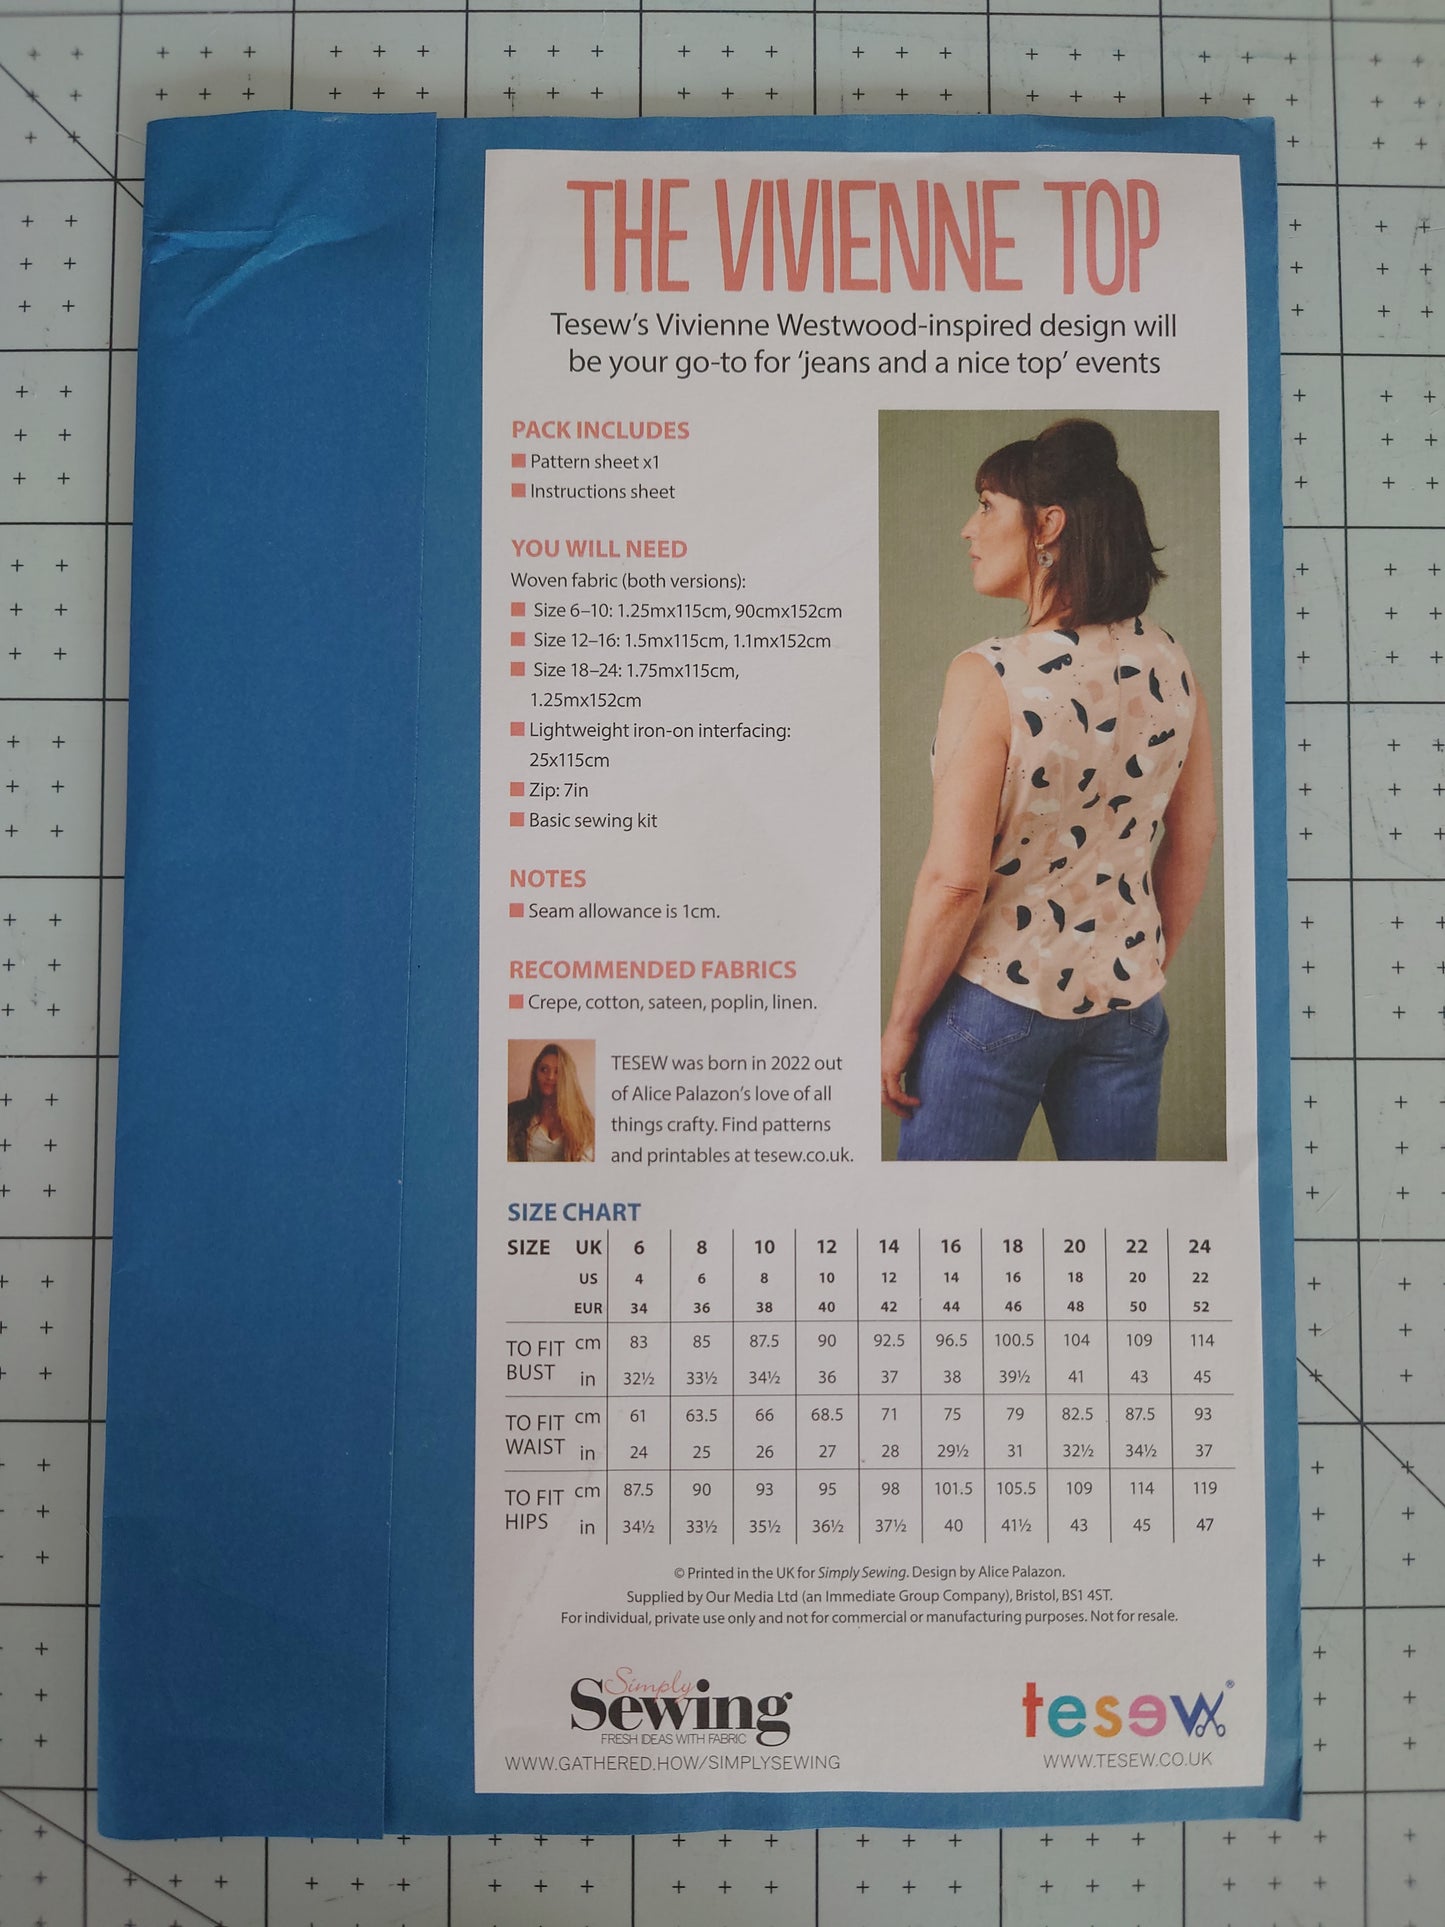 The Vivienne Top